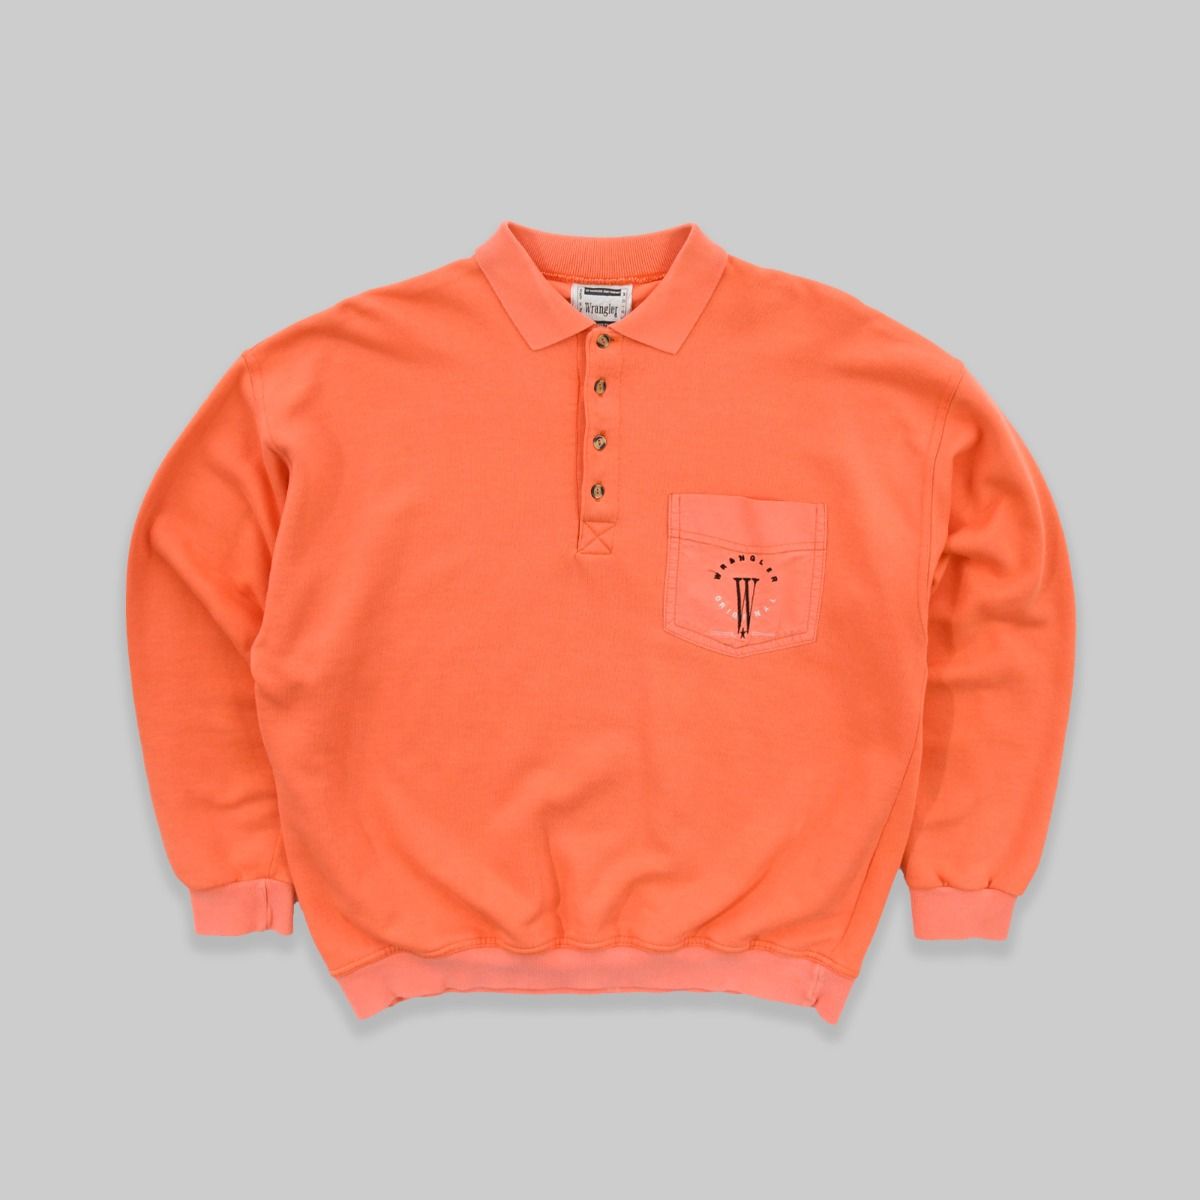 Wrangler 1980s Sweatshirt